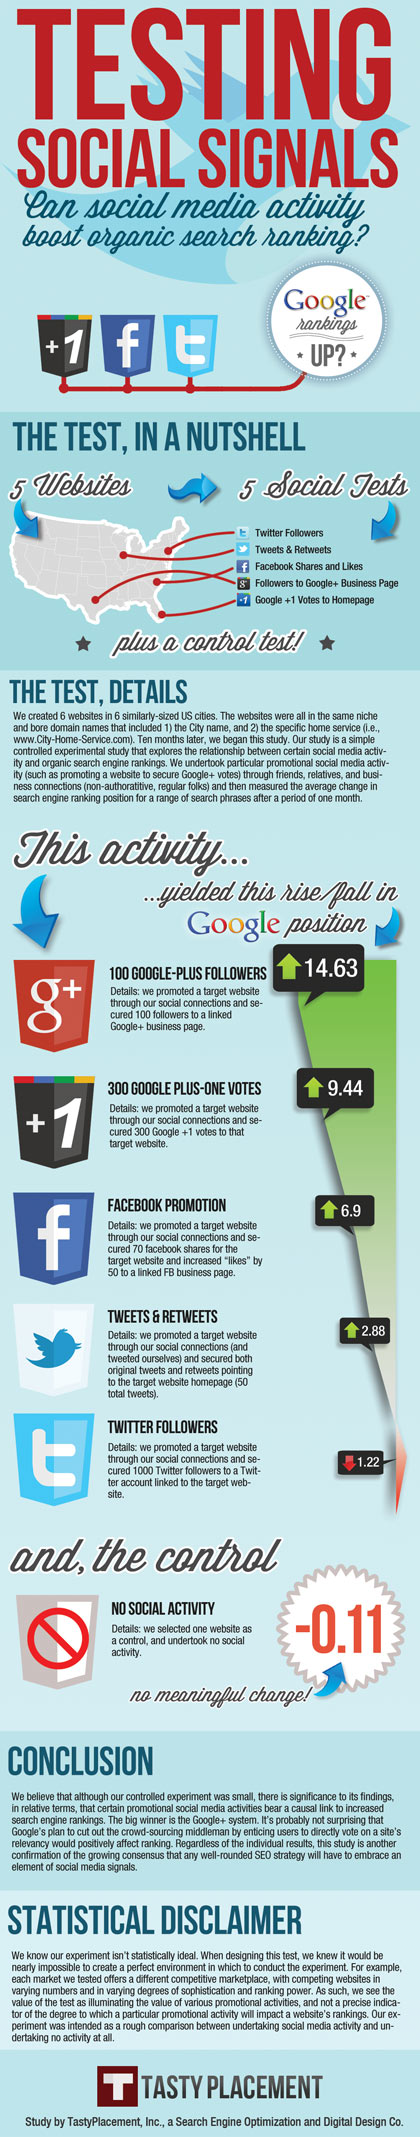 Social Media Infographic: Testing Social Signals